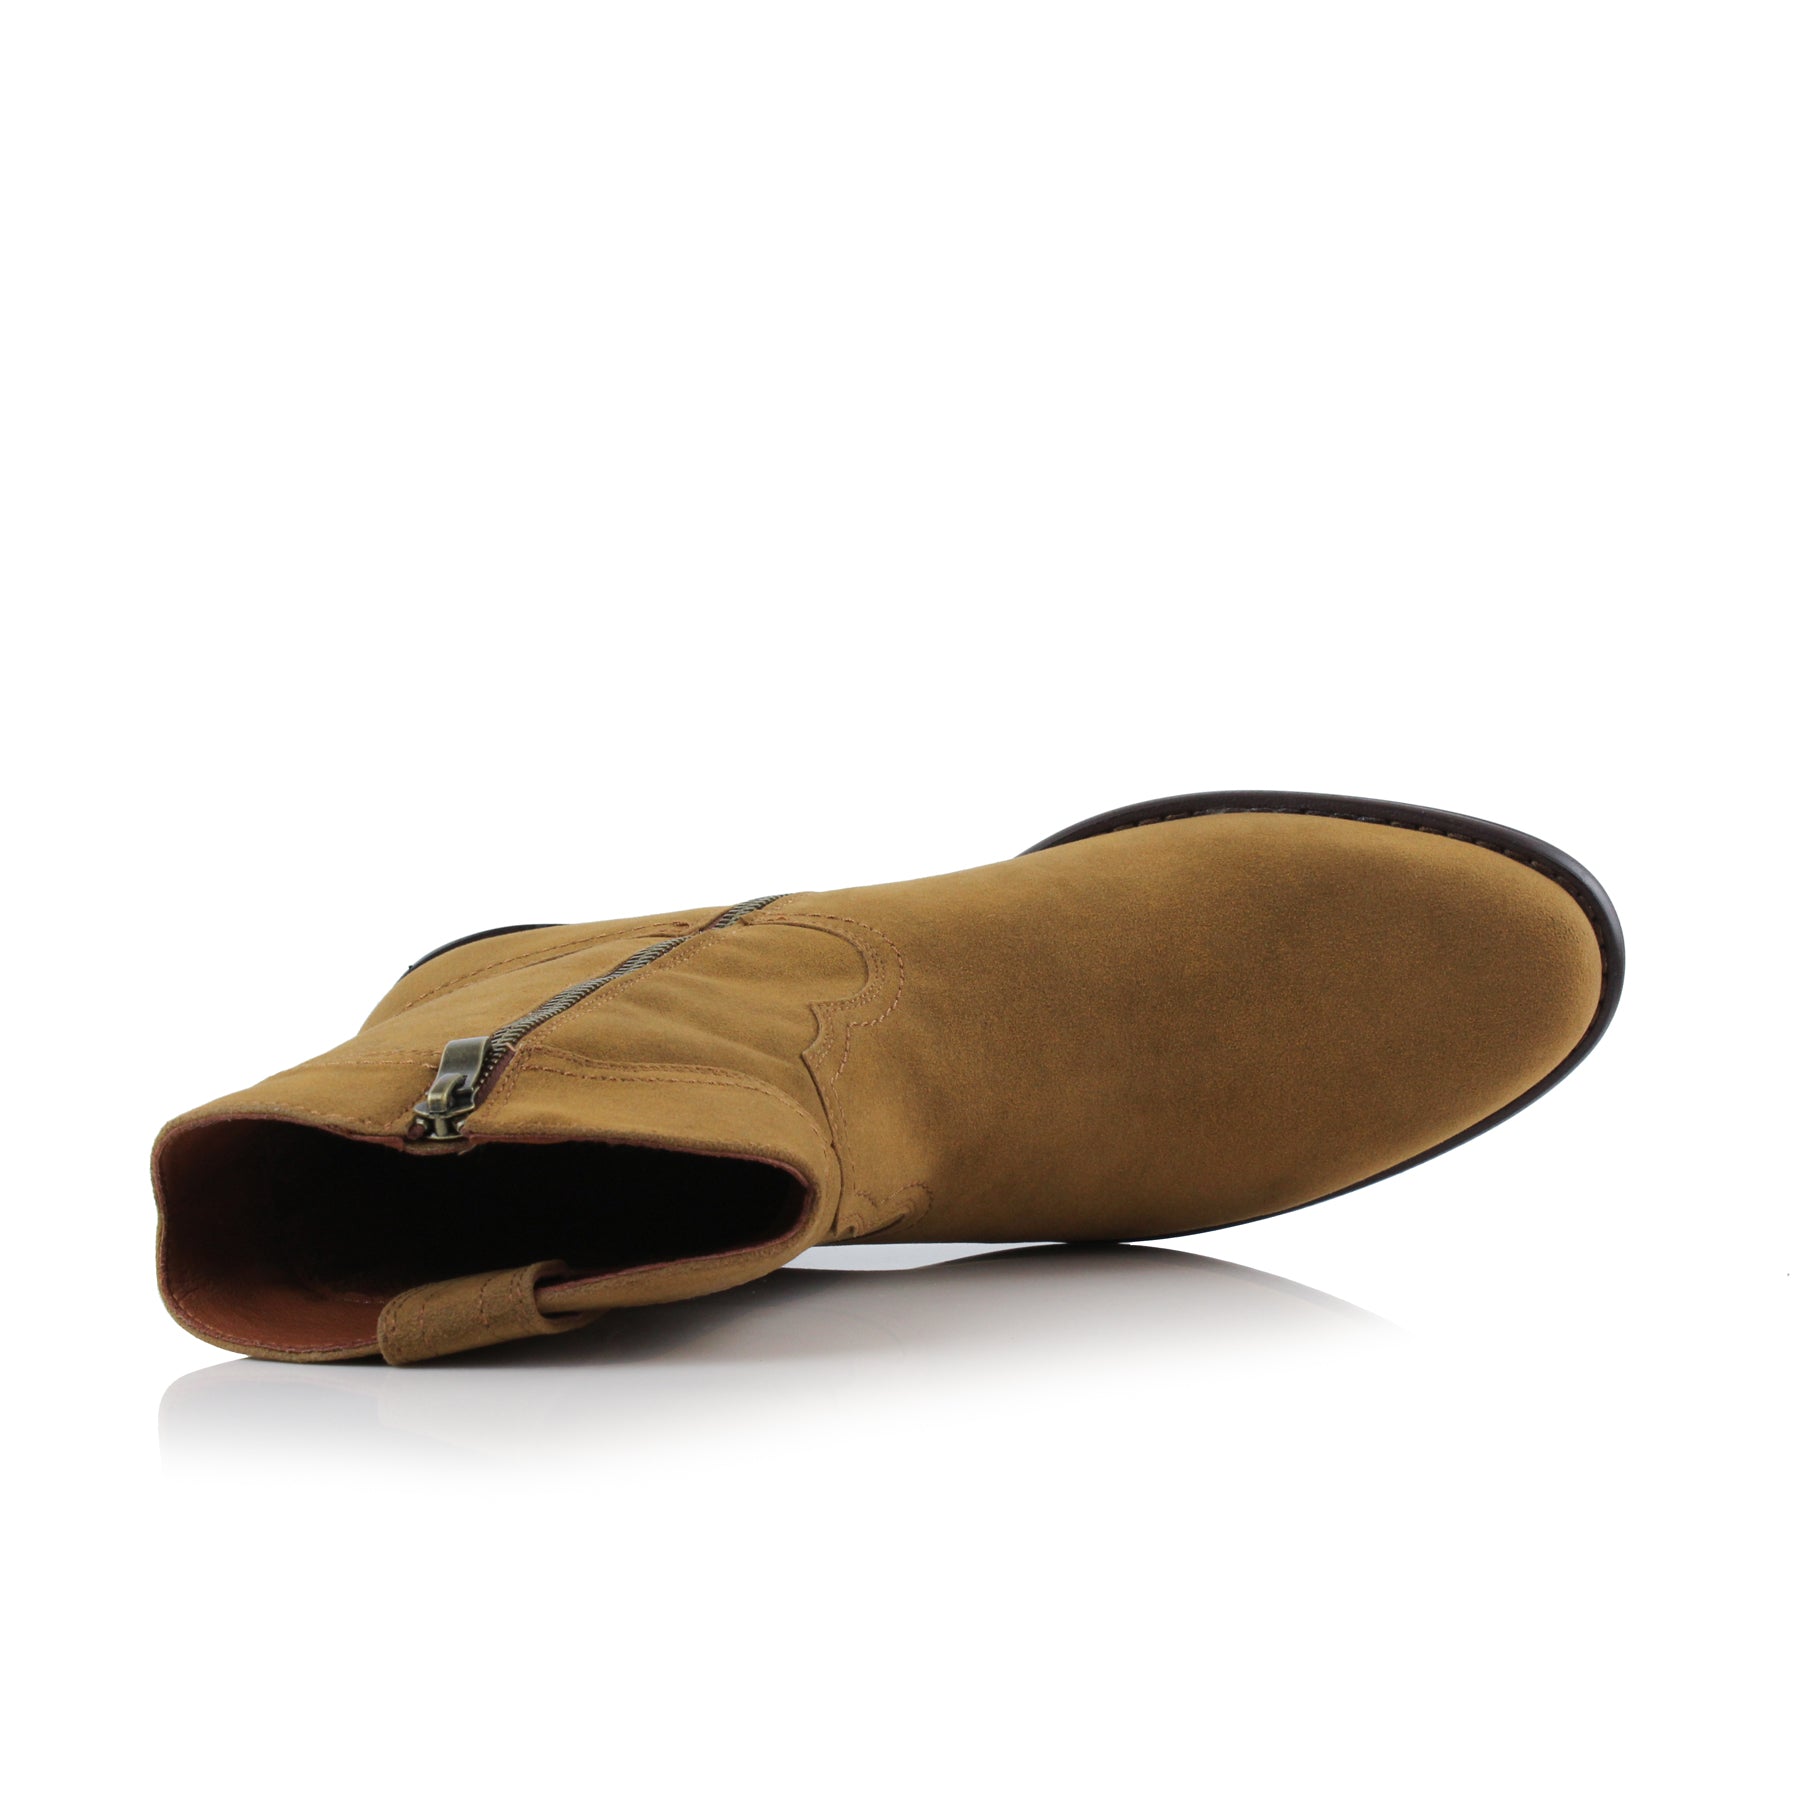 Men's Suede Western Boots | Austin by Ferro Aldo | Conal Footwear | Top-Down Angle View